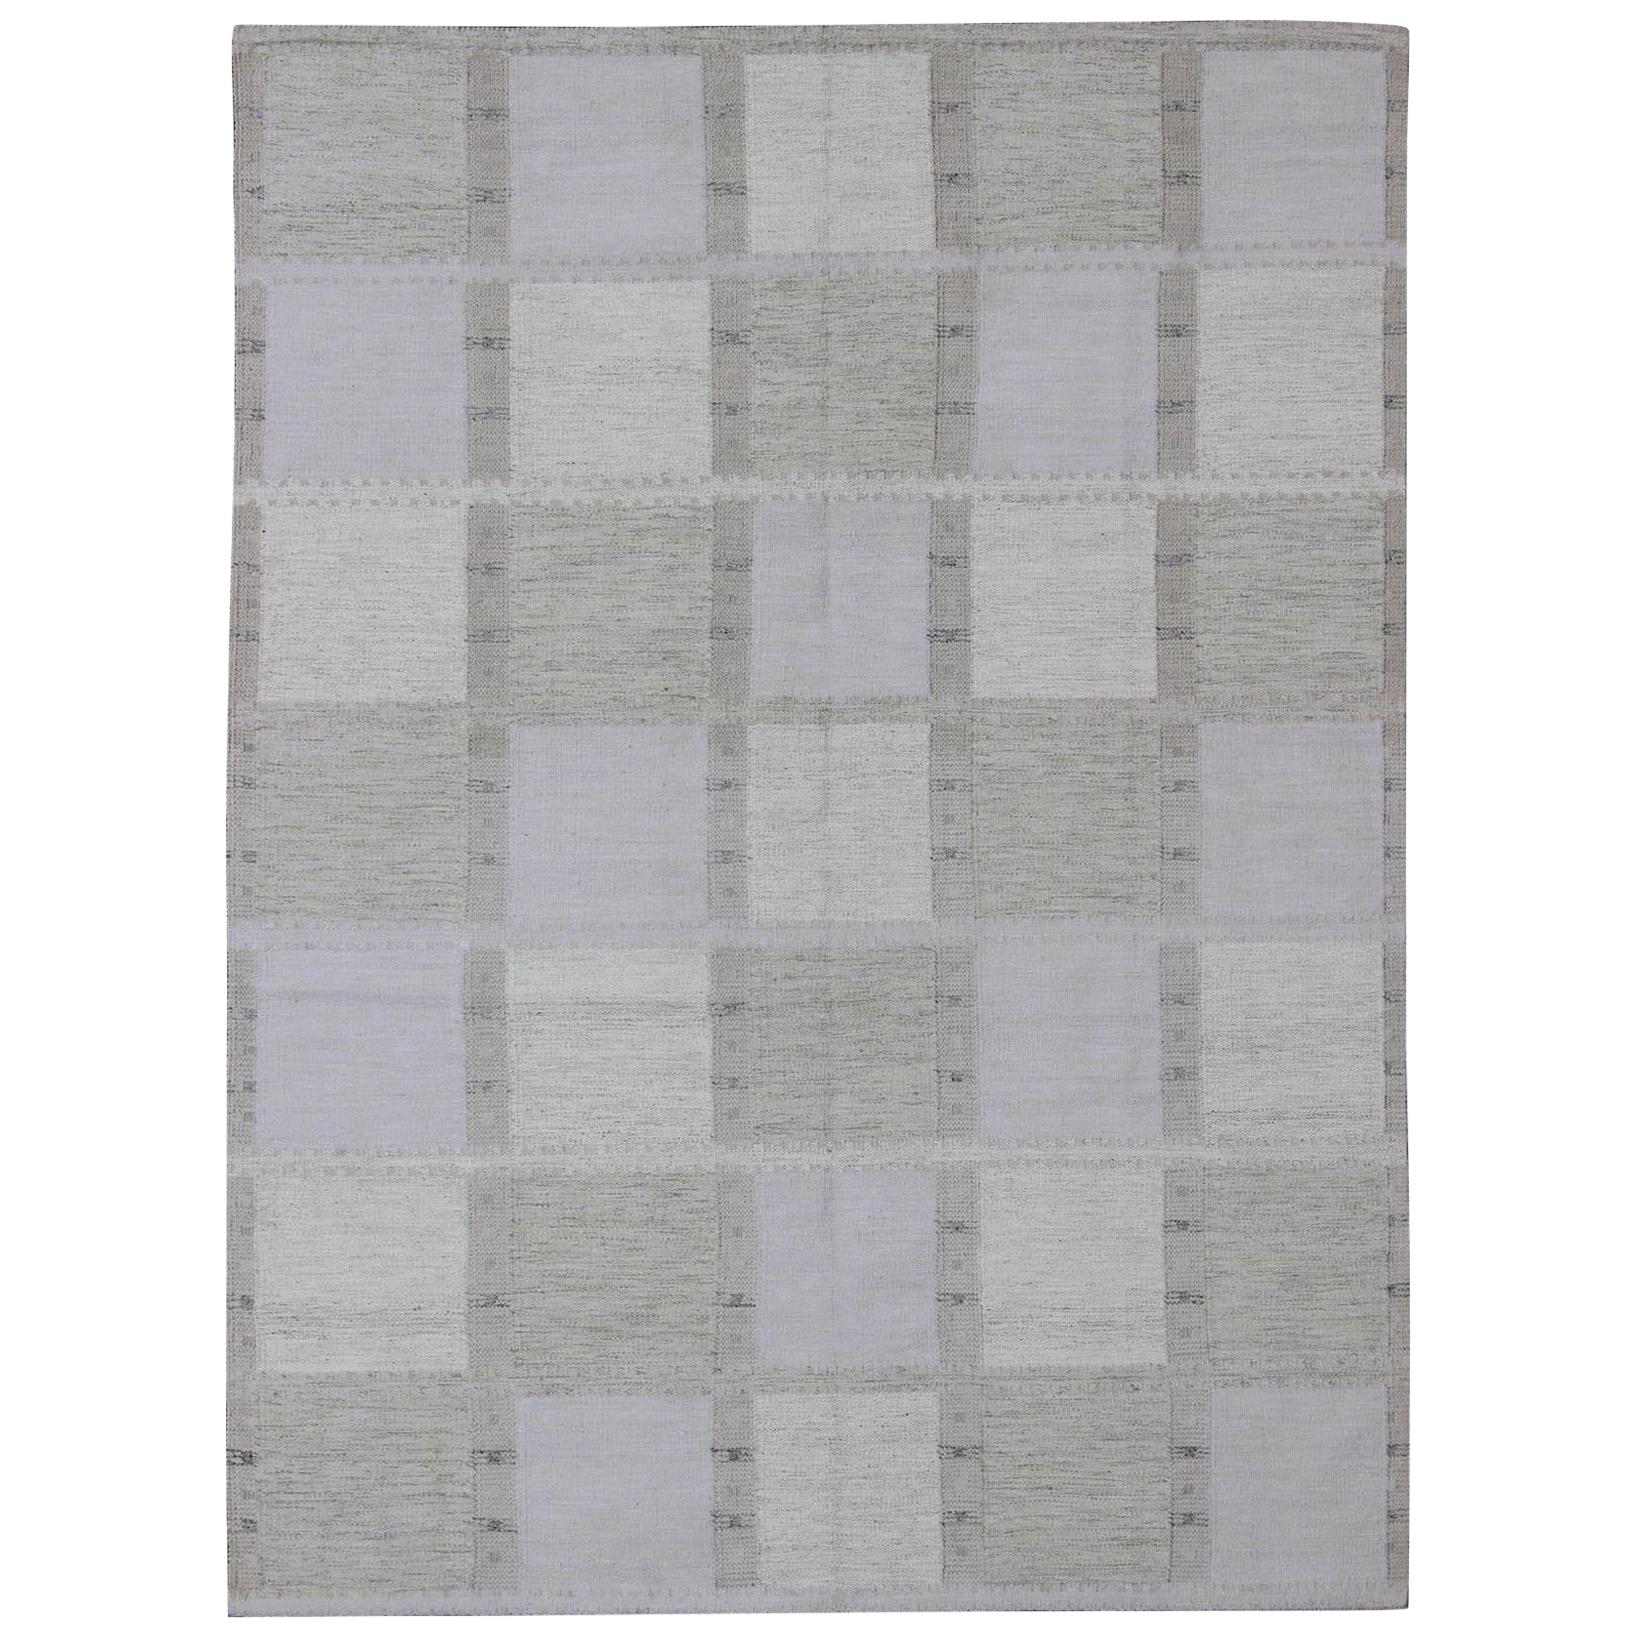 Modern Scandinavian Flat-Weave Rug Design with Checkerboard Design in Gray Tones